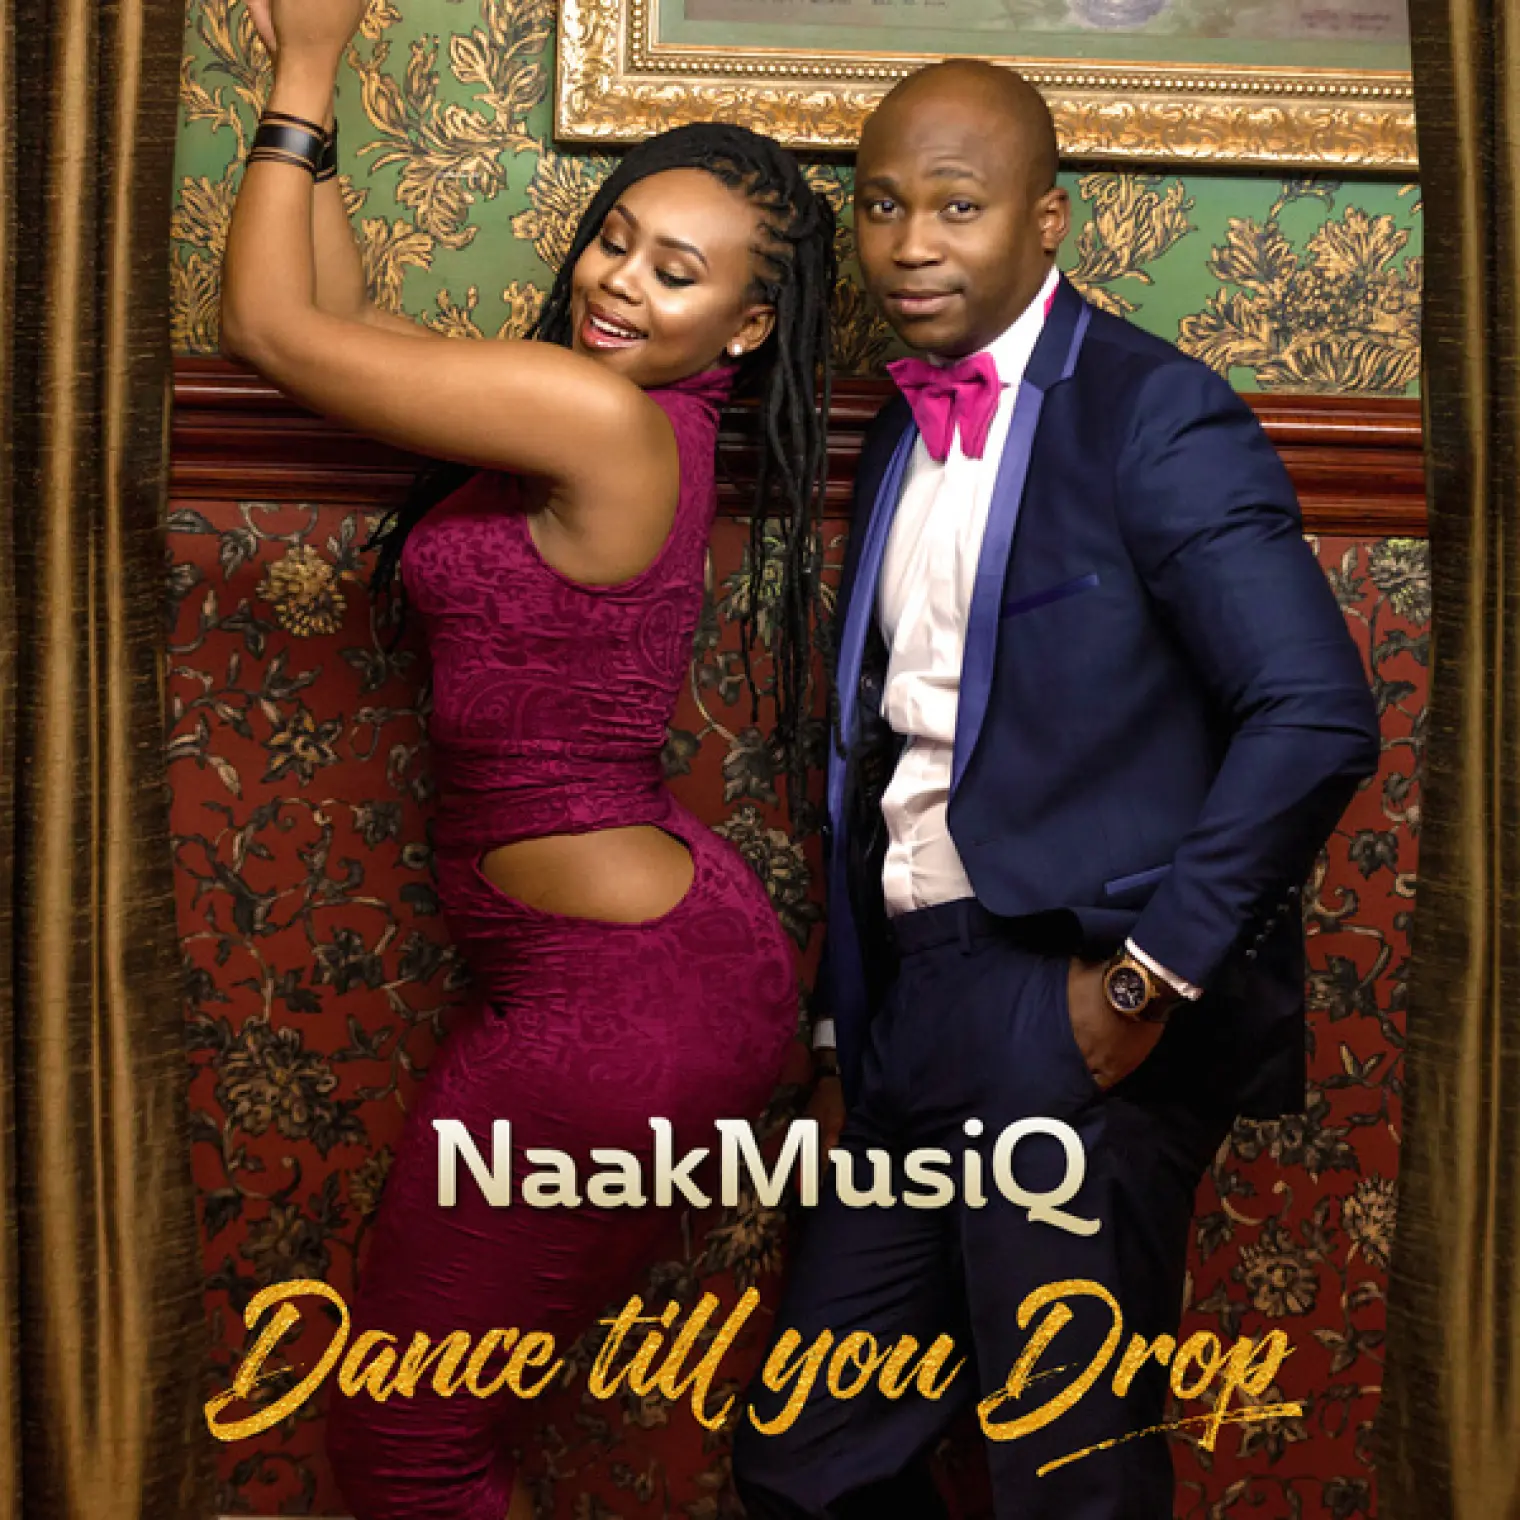 Dance Till You Drop Single -  NaakMusiQ 